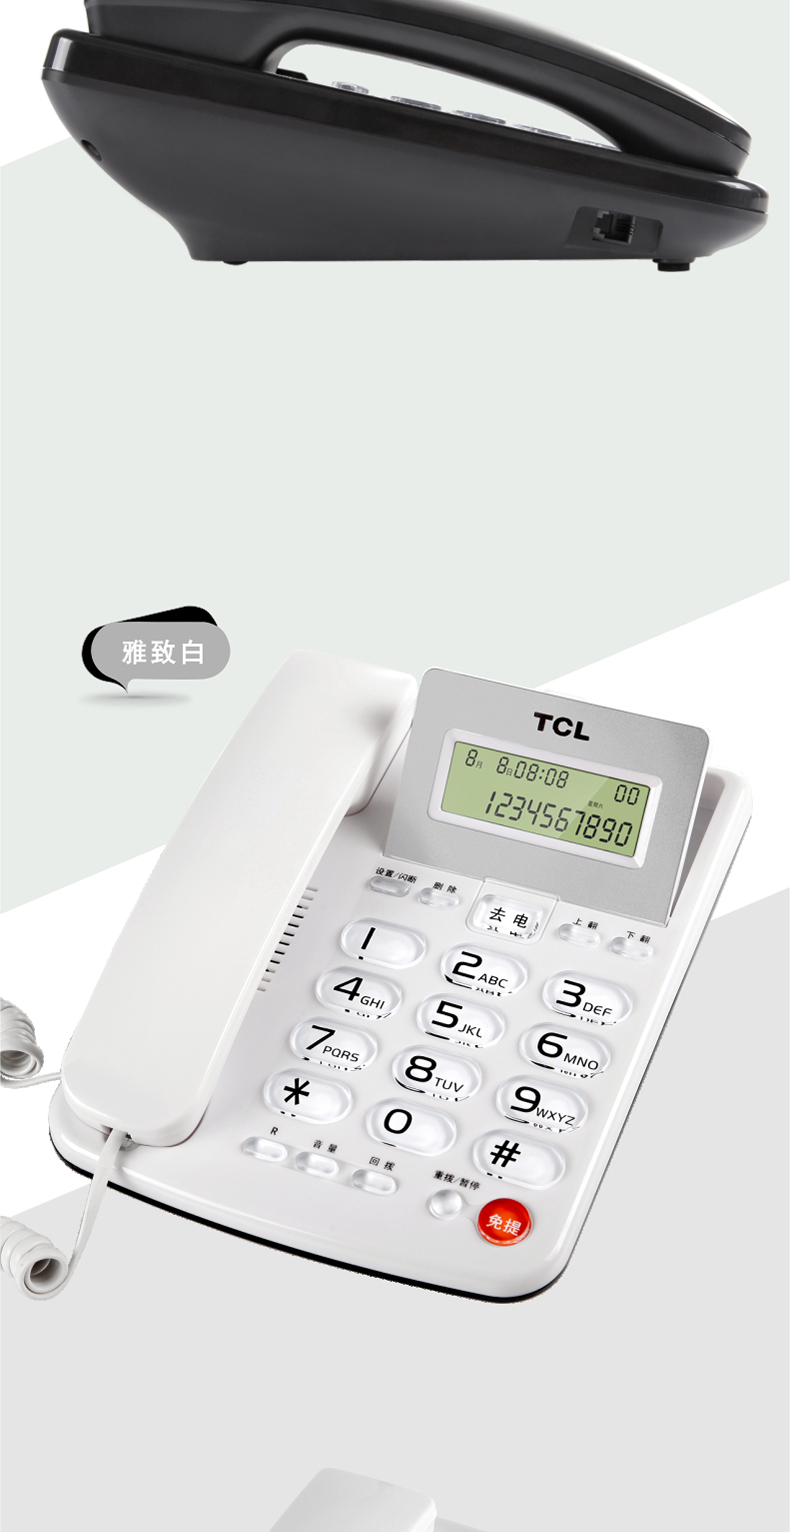 TCL电话机 HCD868(165)TSD 双接口 黑色